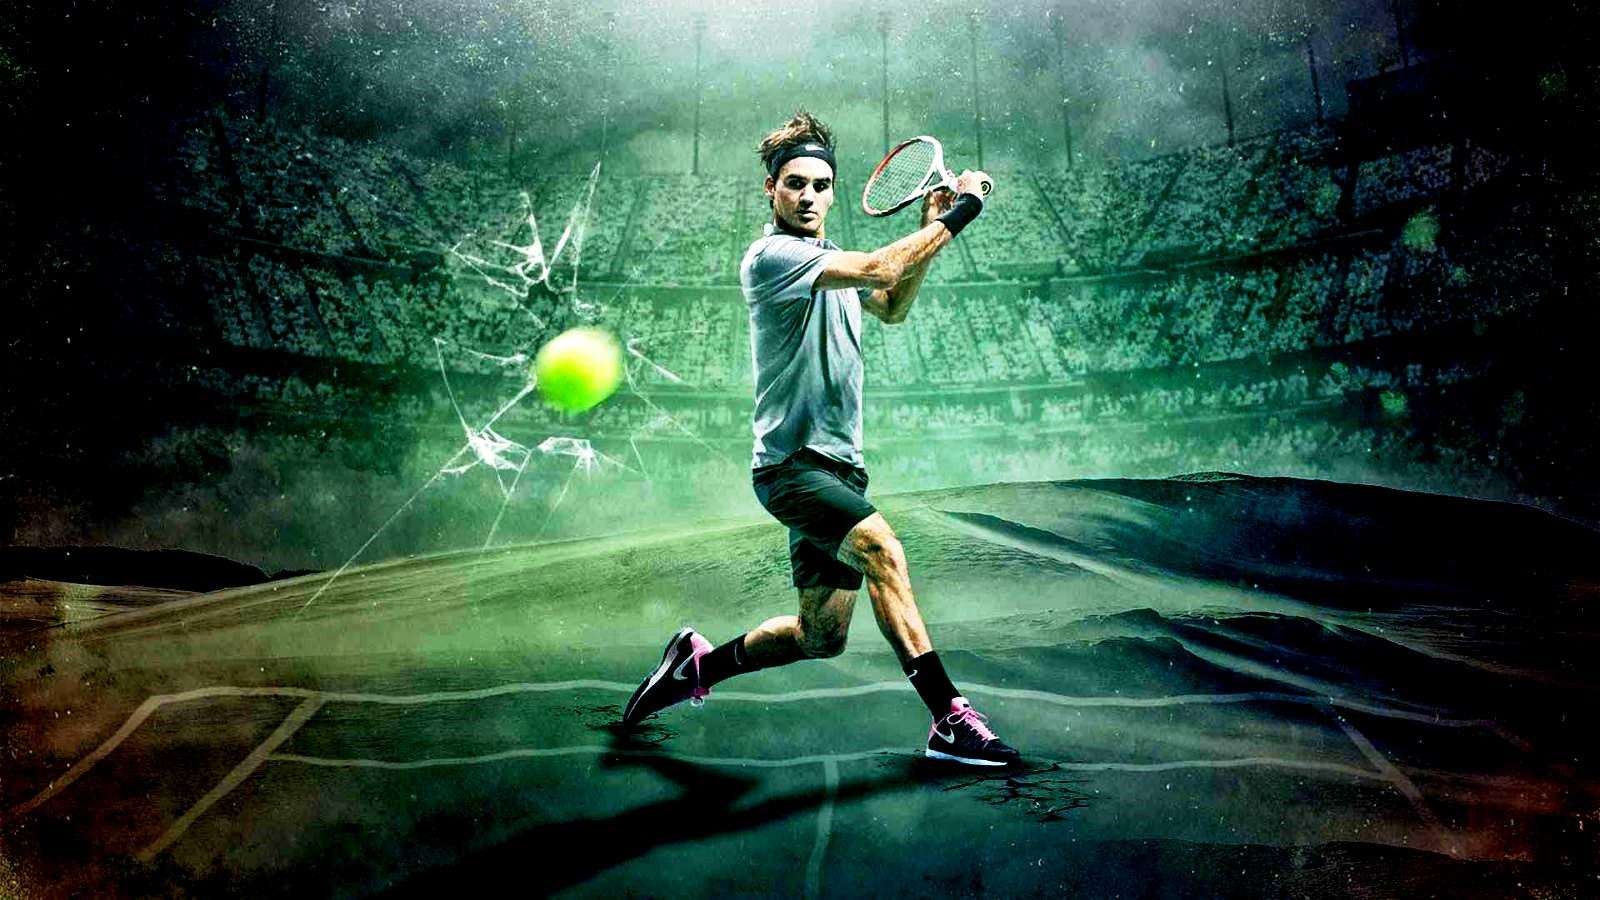 Federer training routine